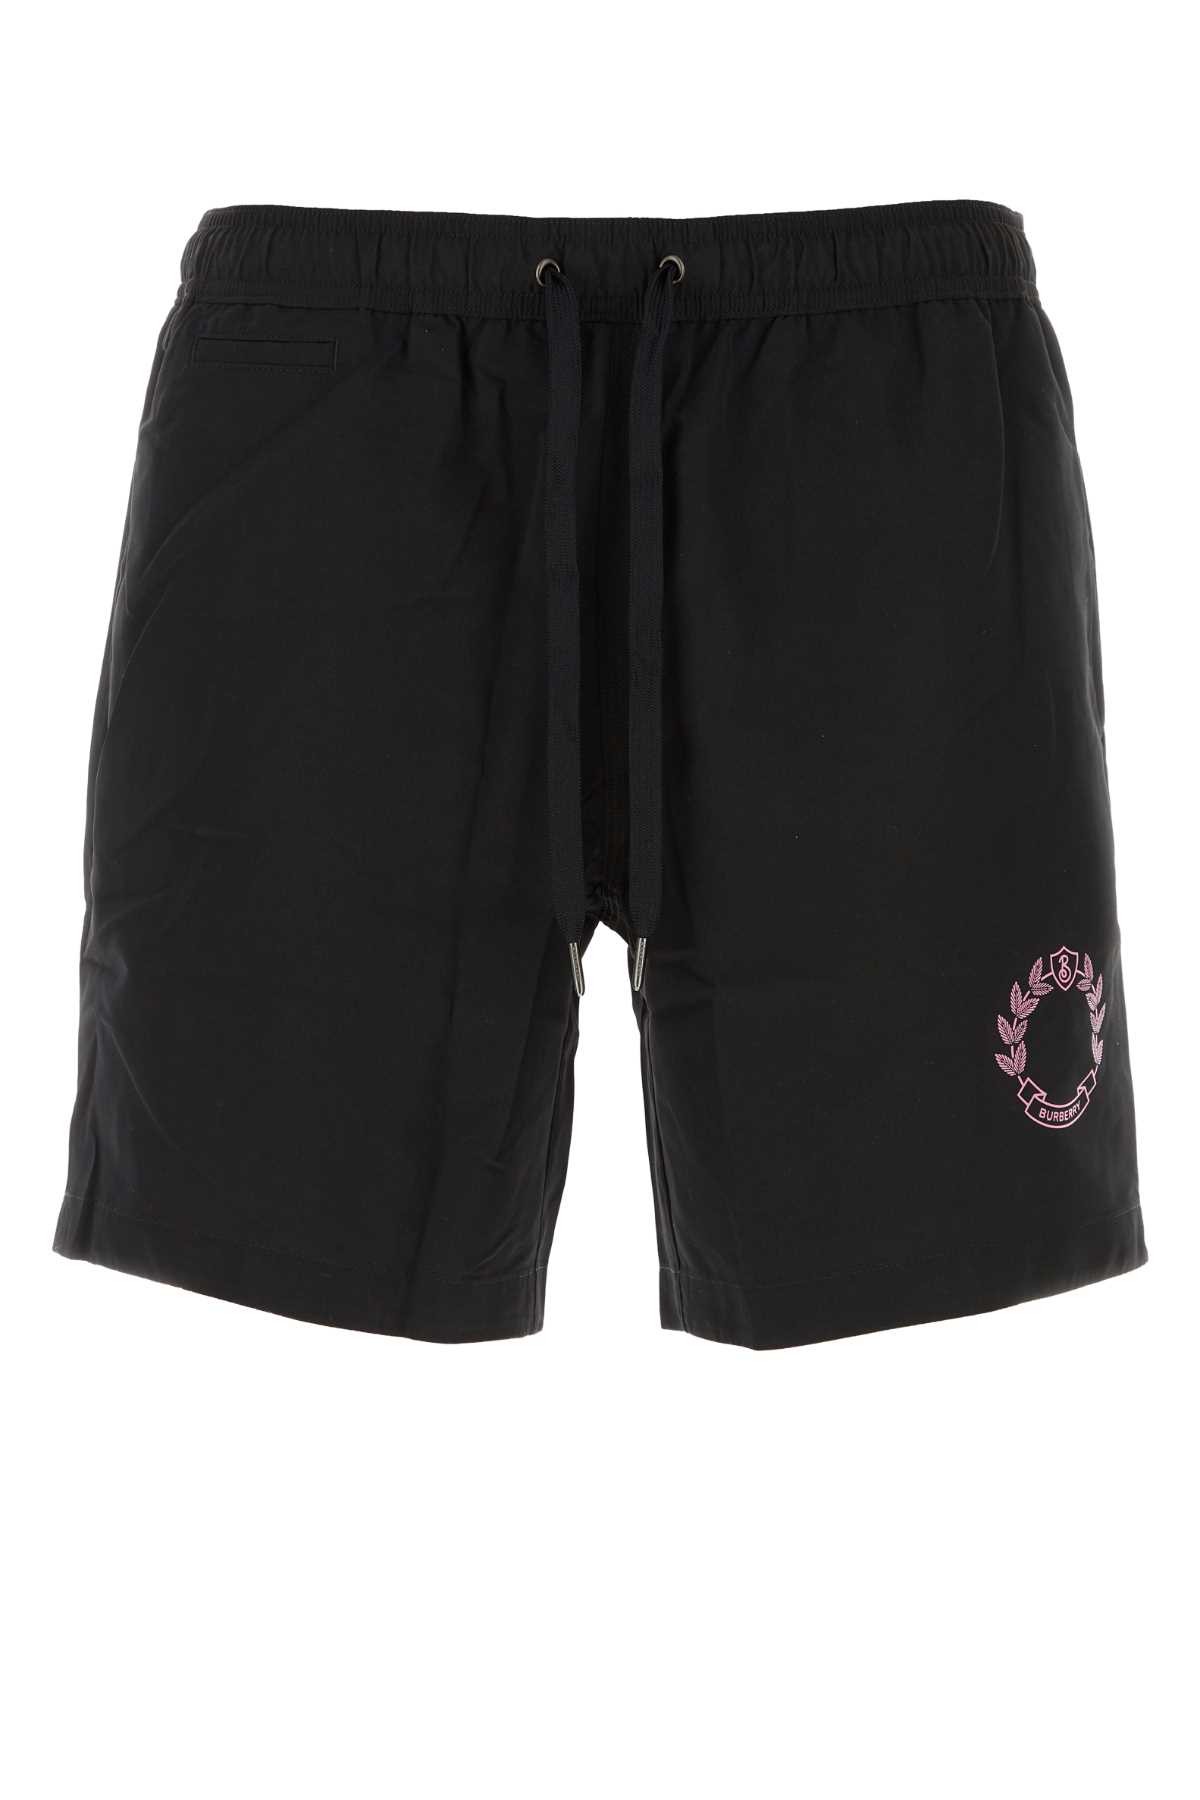 Black Polyester Swimming Shorts